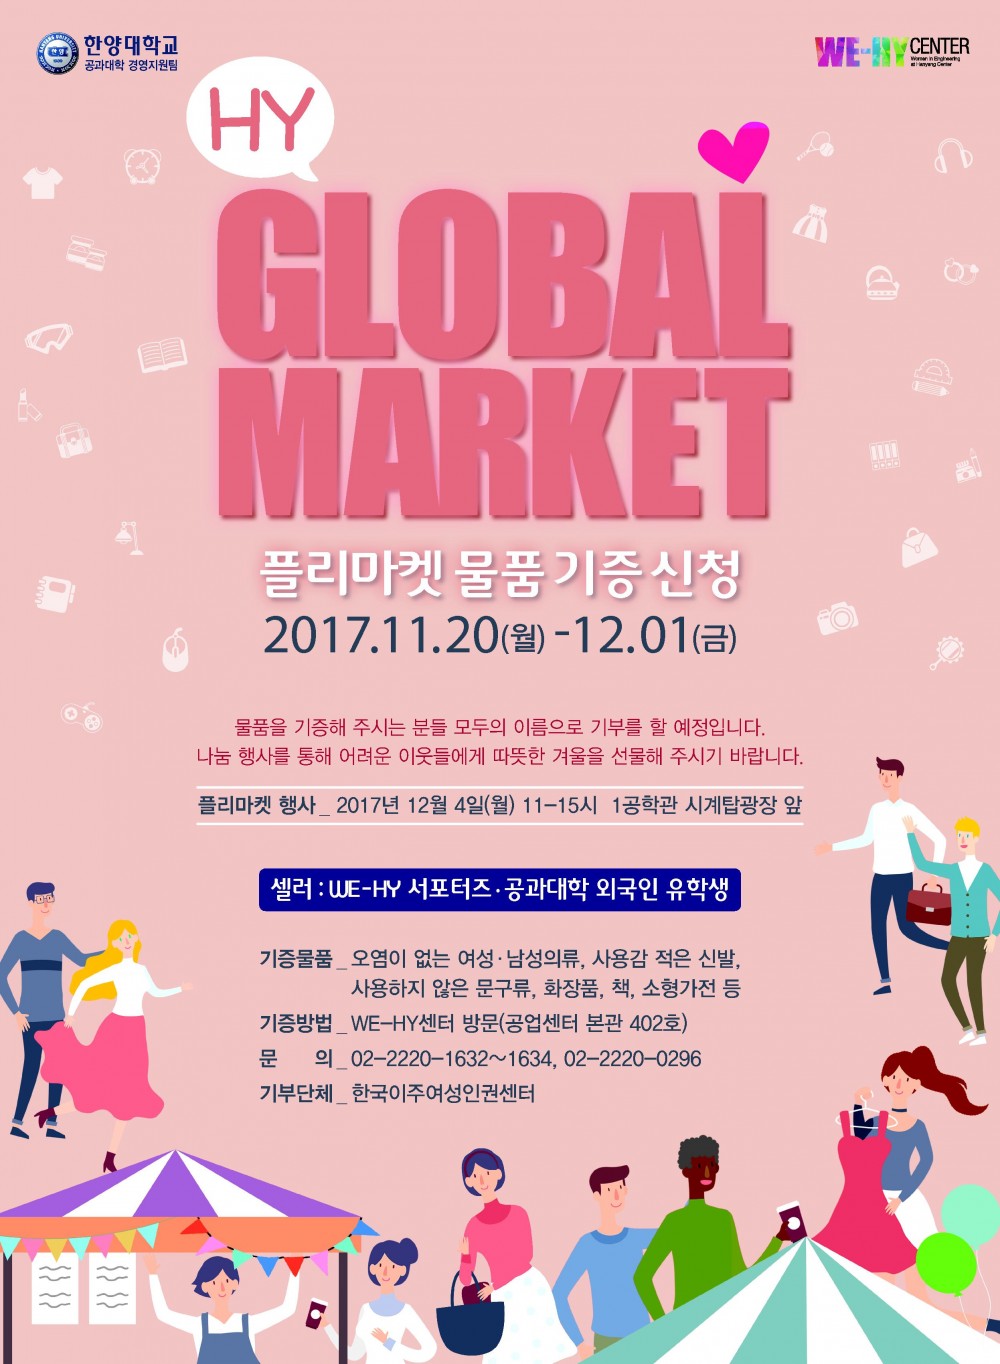 HY Global Market 국영문 포스터_2